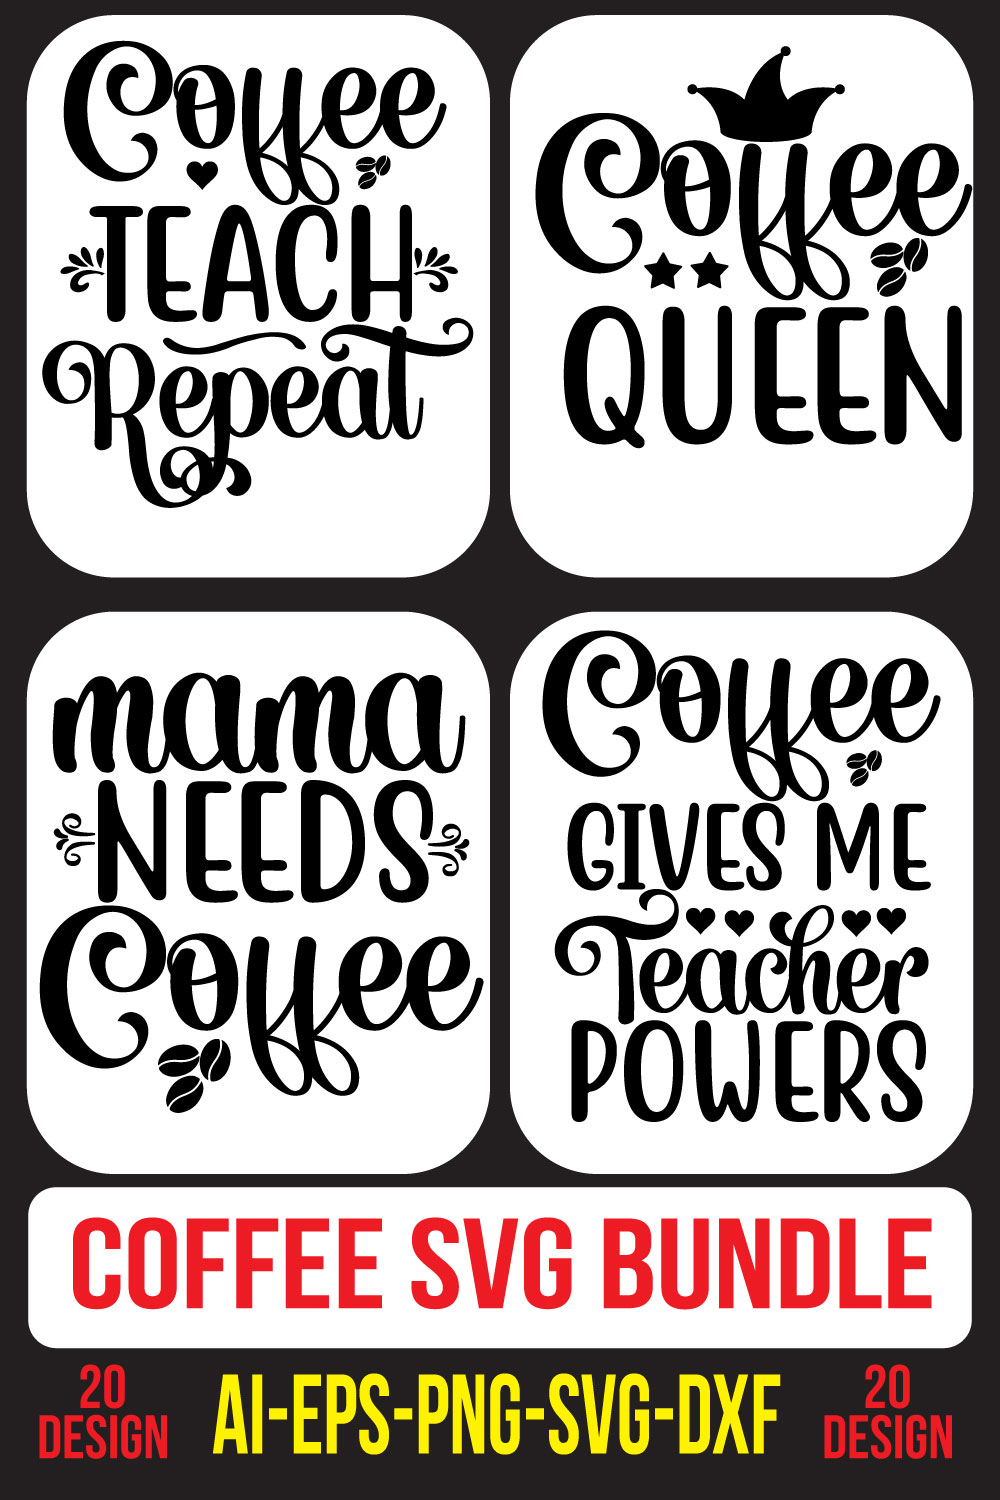 Coffee SVG Bundle pinterest preview image.